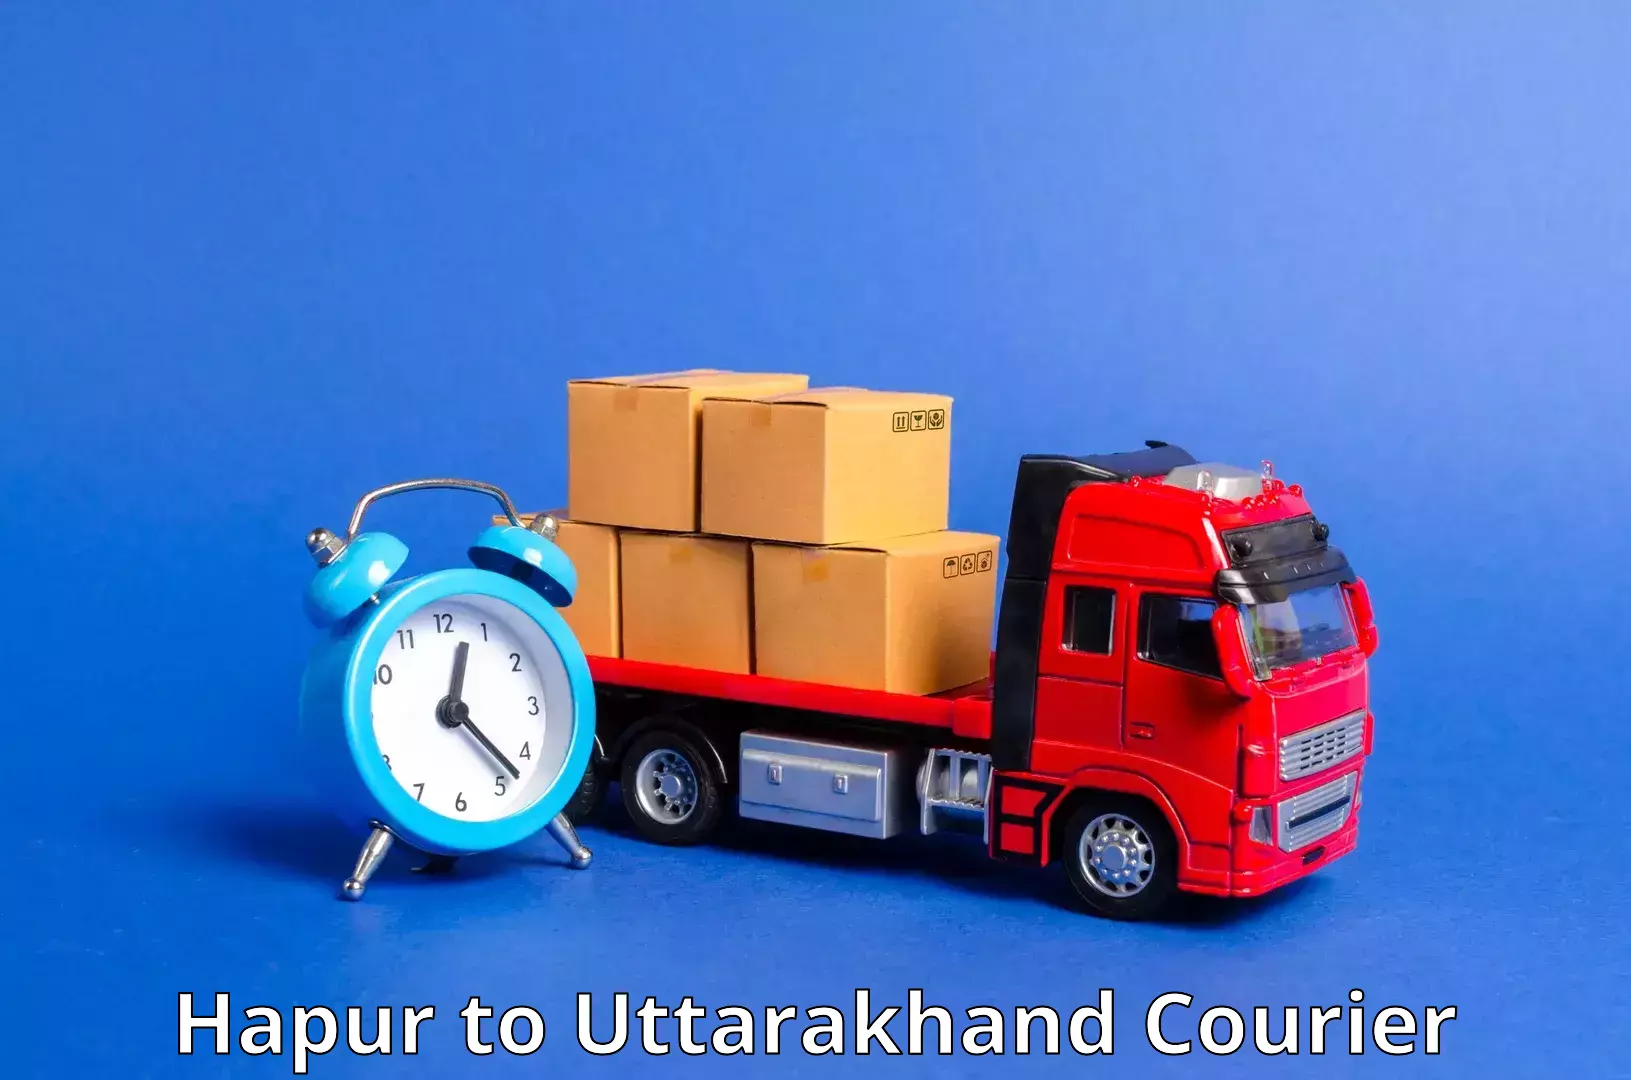 Scheduled delivery Hapur to Uttarakhand